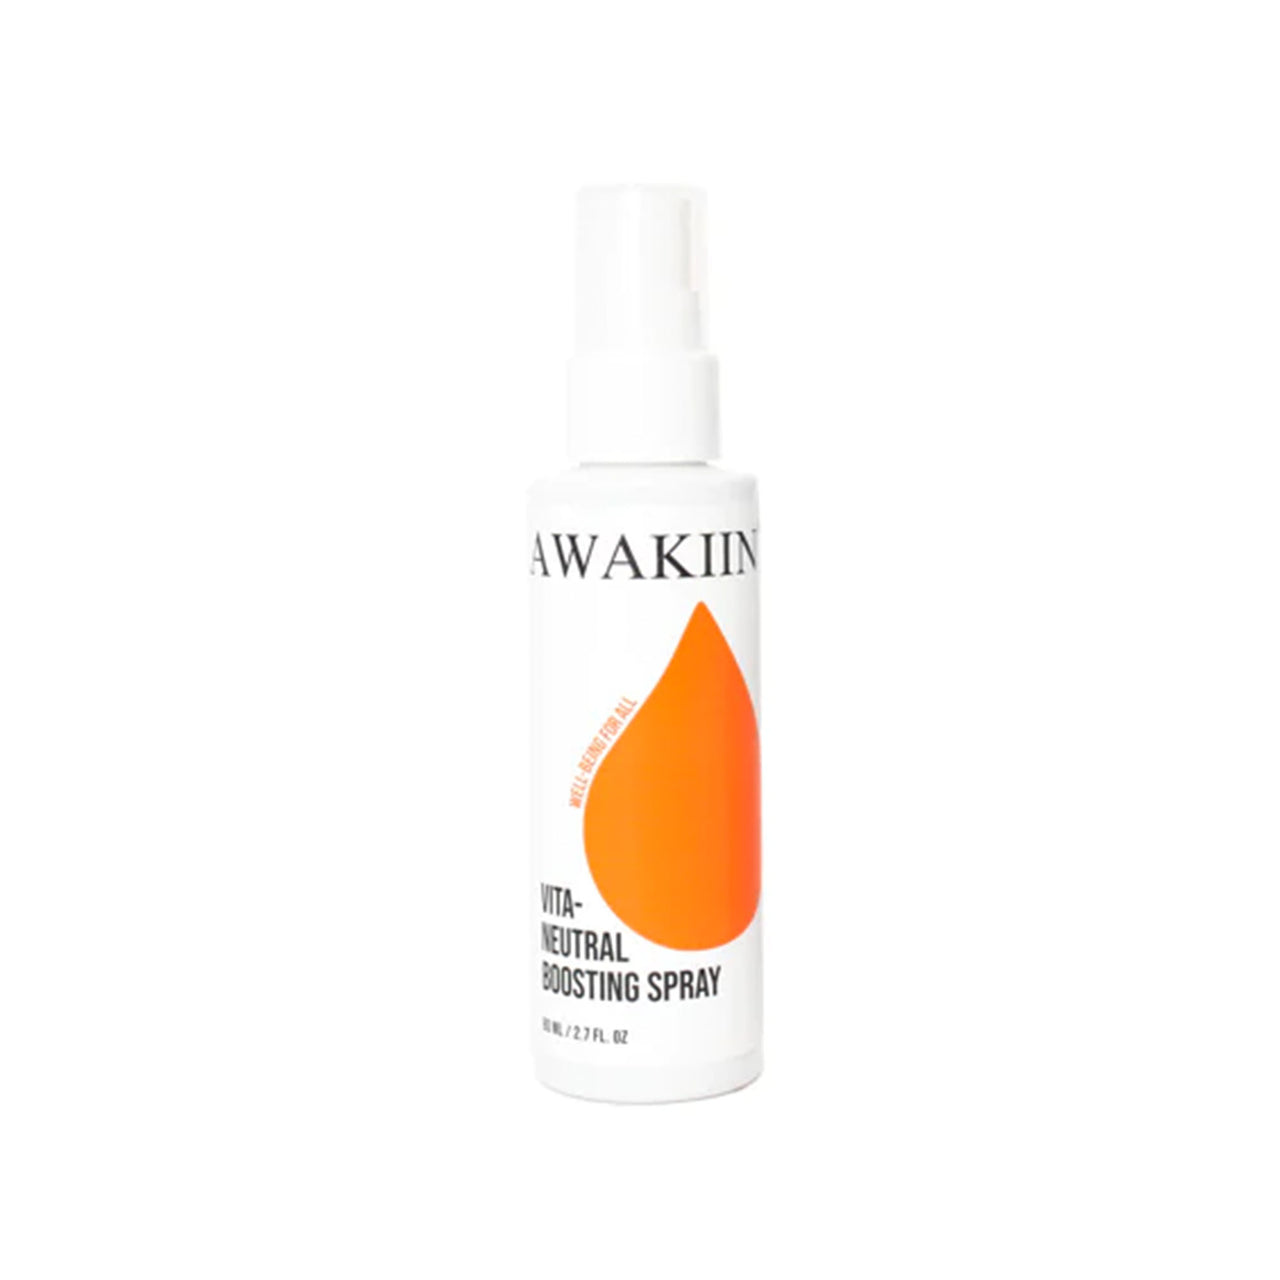 AWAKIIN-AKS2029 Vita-Neutral Boosting Spray : 1 PC